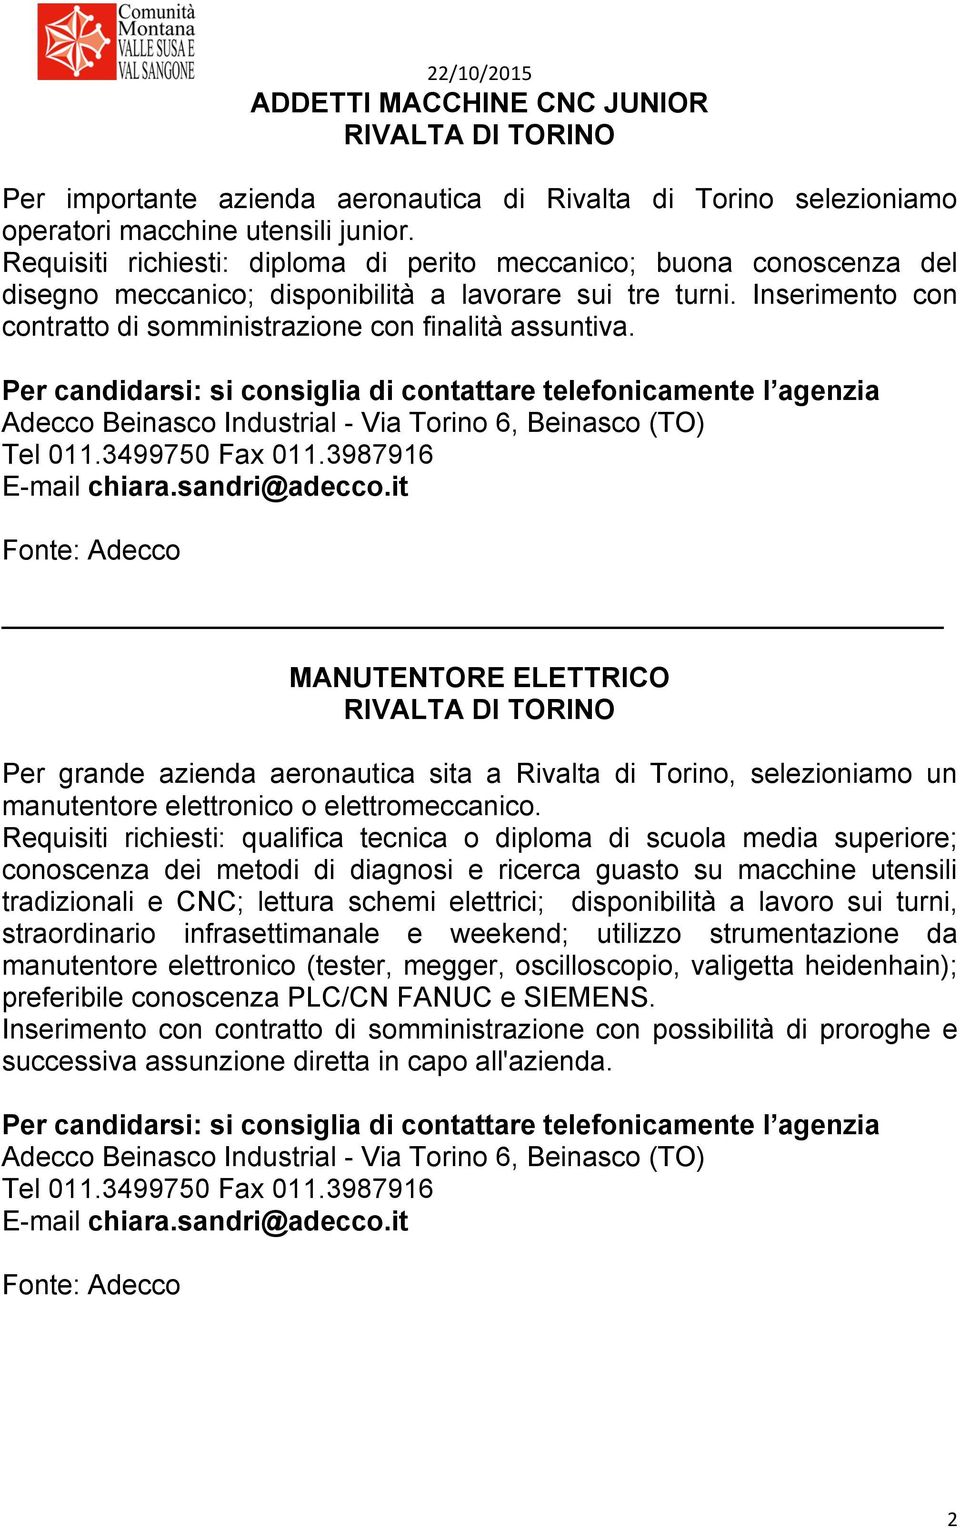 Adecco Beinasco Industrial - Via Torino 6, Beinasco (TO) Tel 011.3499750 Fax 011.3987916 E-mail chiara.sandri@adecco.